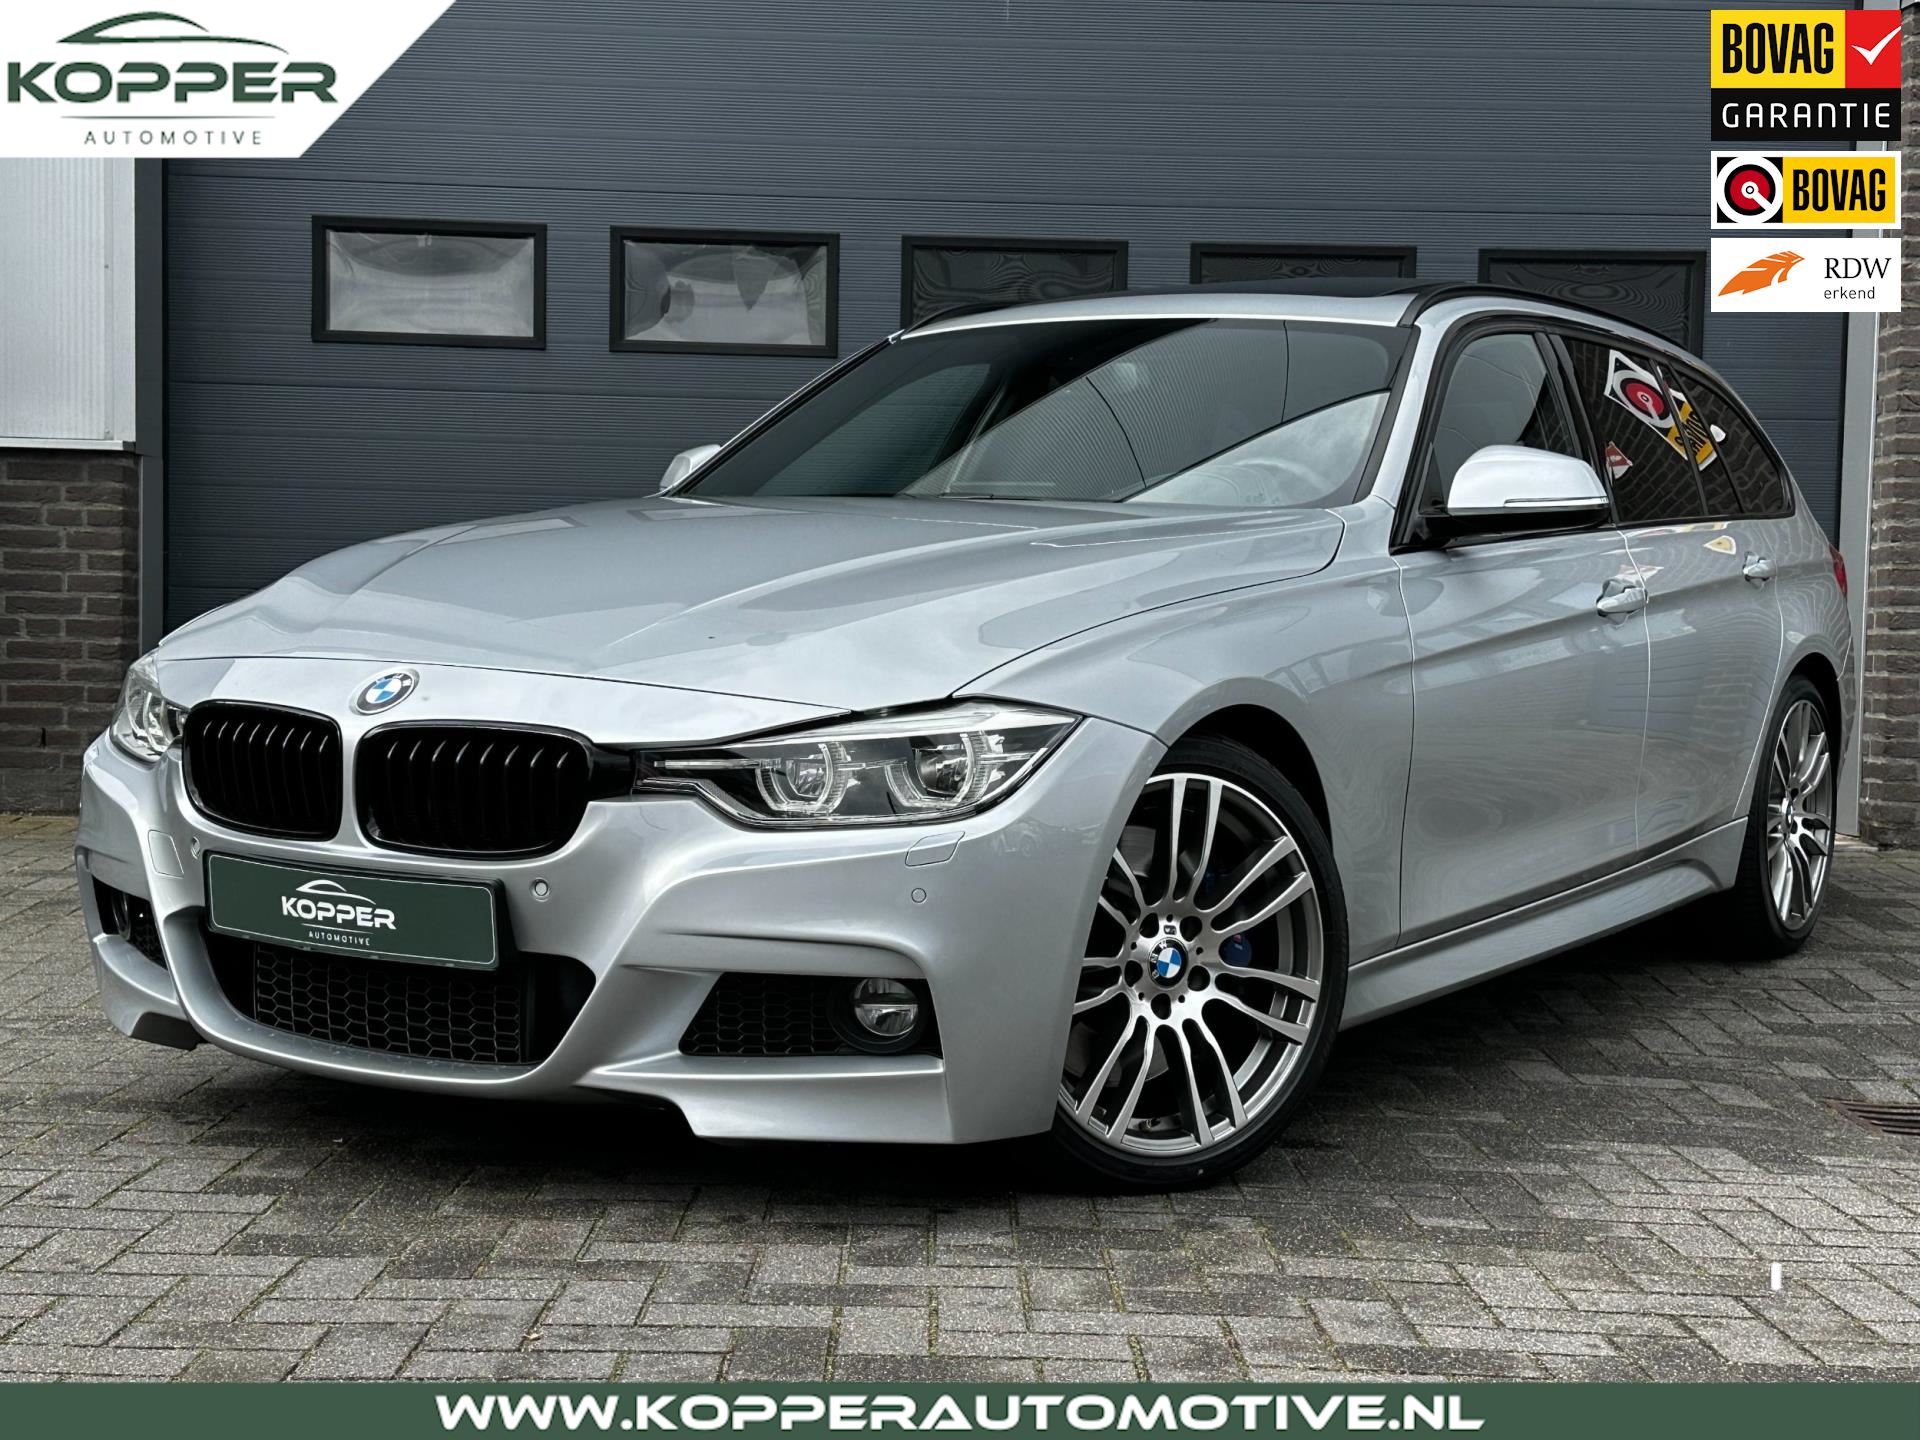 BMW 3-serie Touring occasion - Kopper Automotive